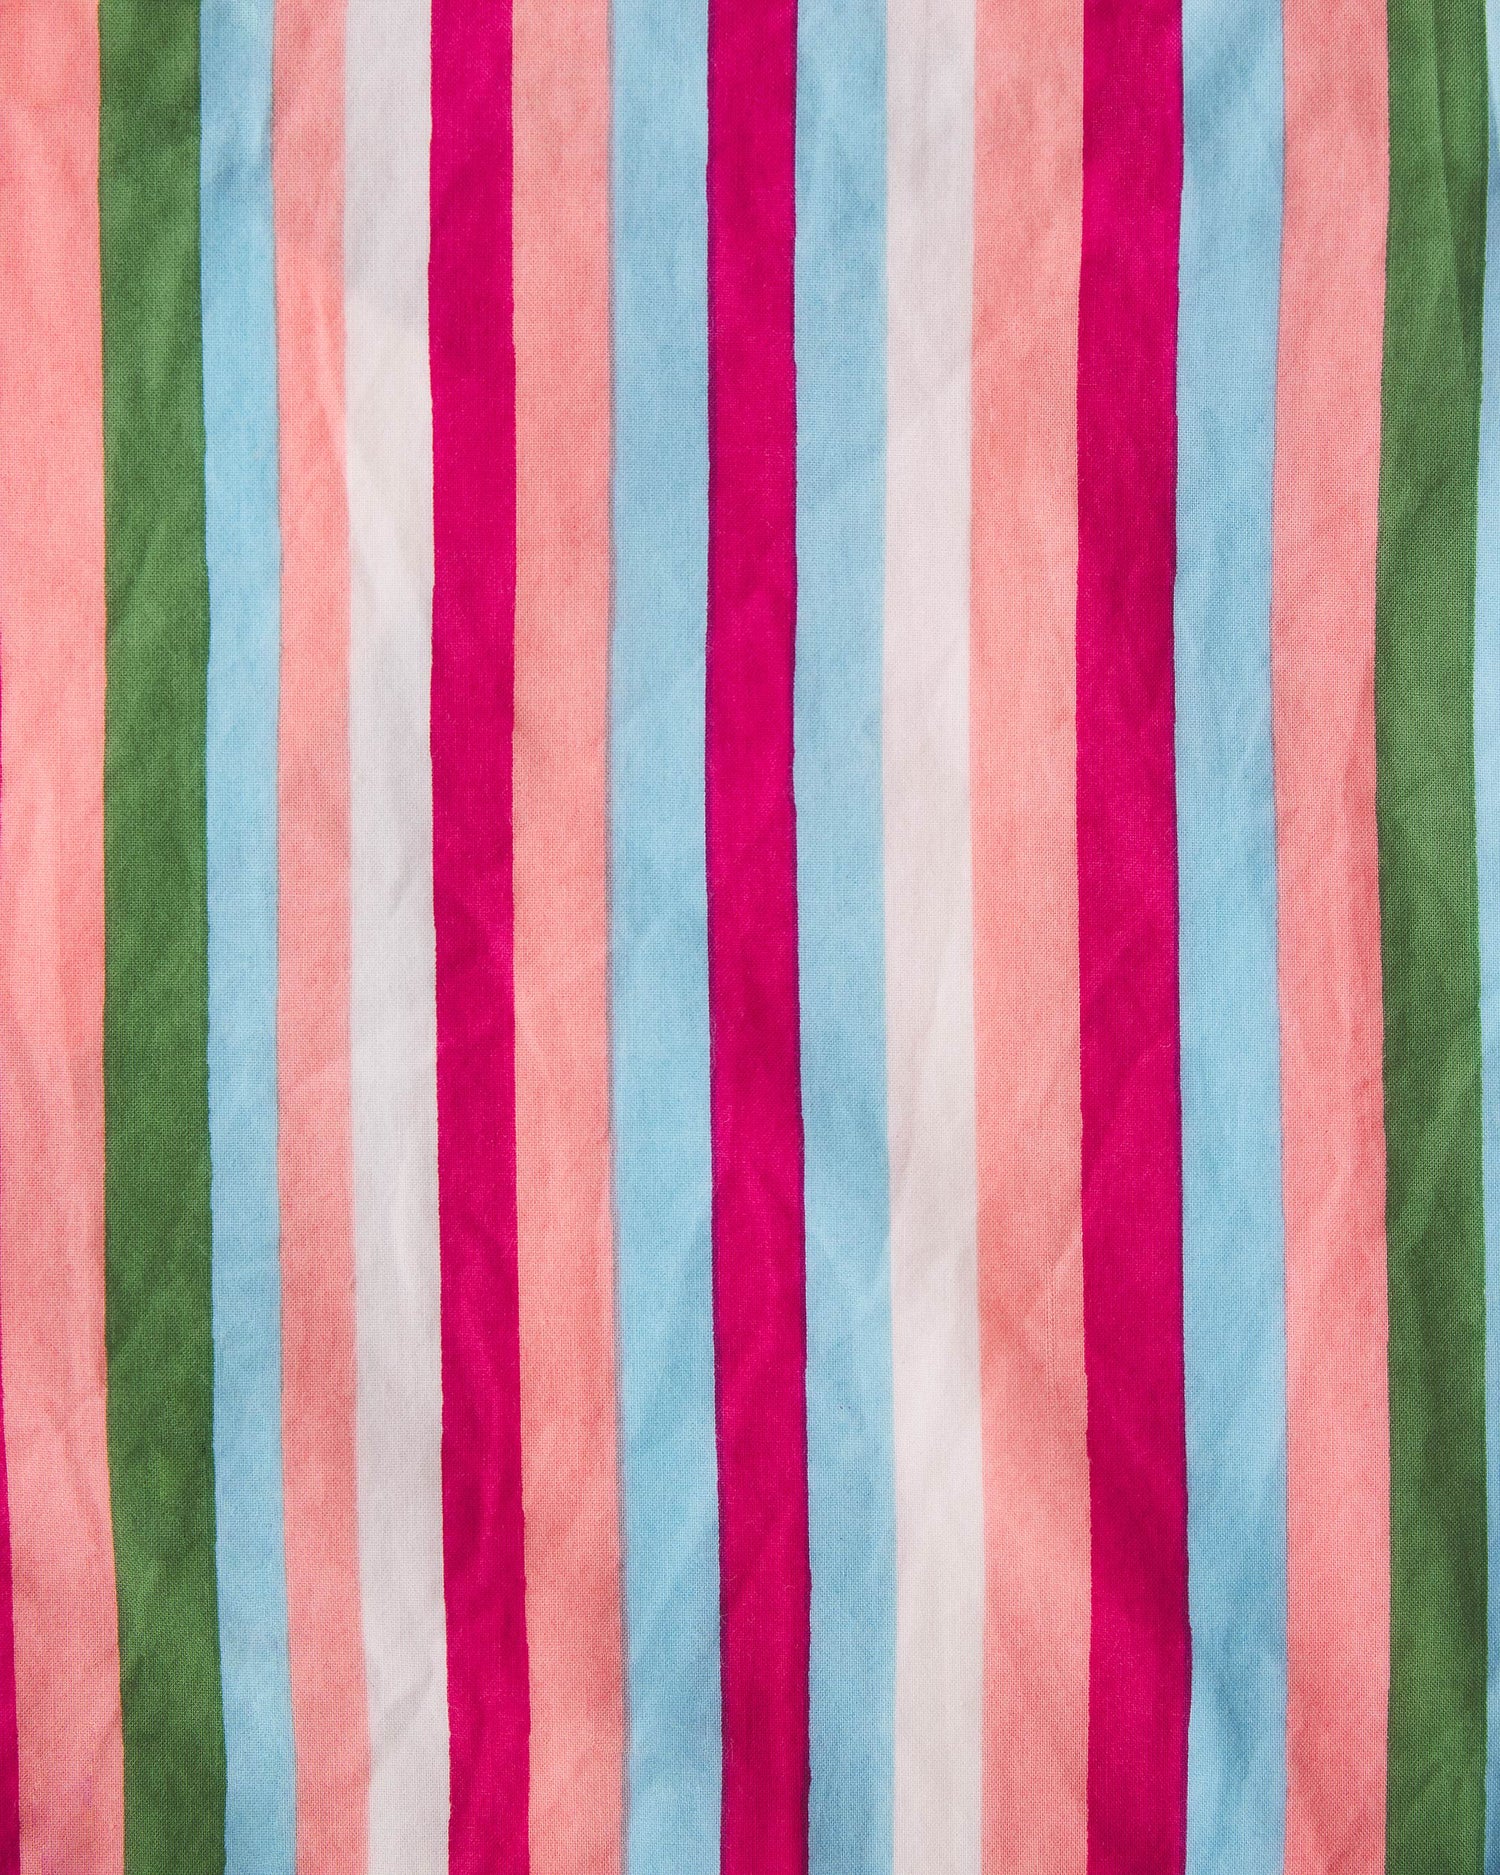 Candy Stripe - Pajama Pants - Fuchsia Blush - Printfresh